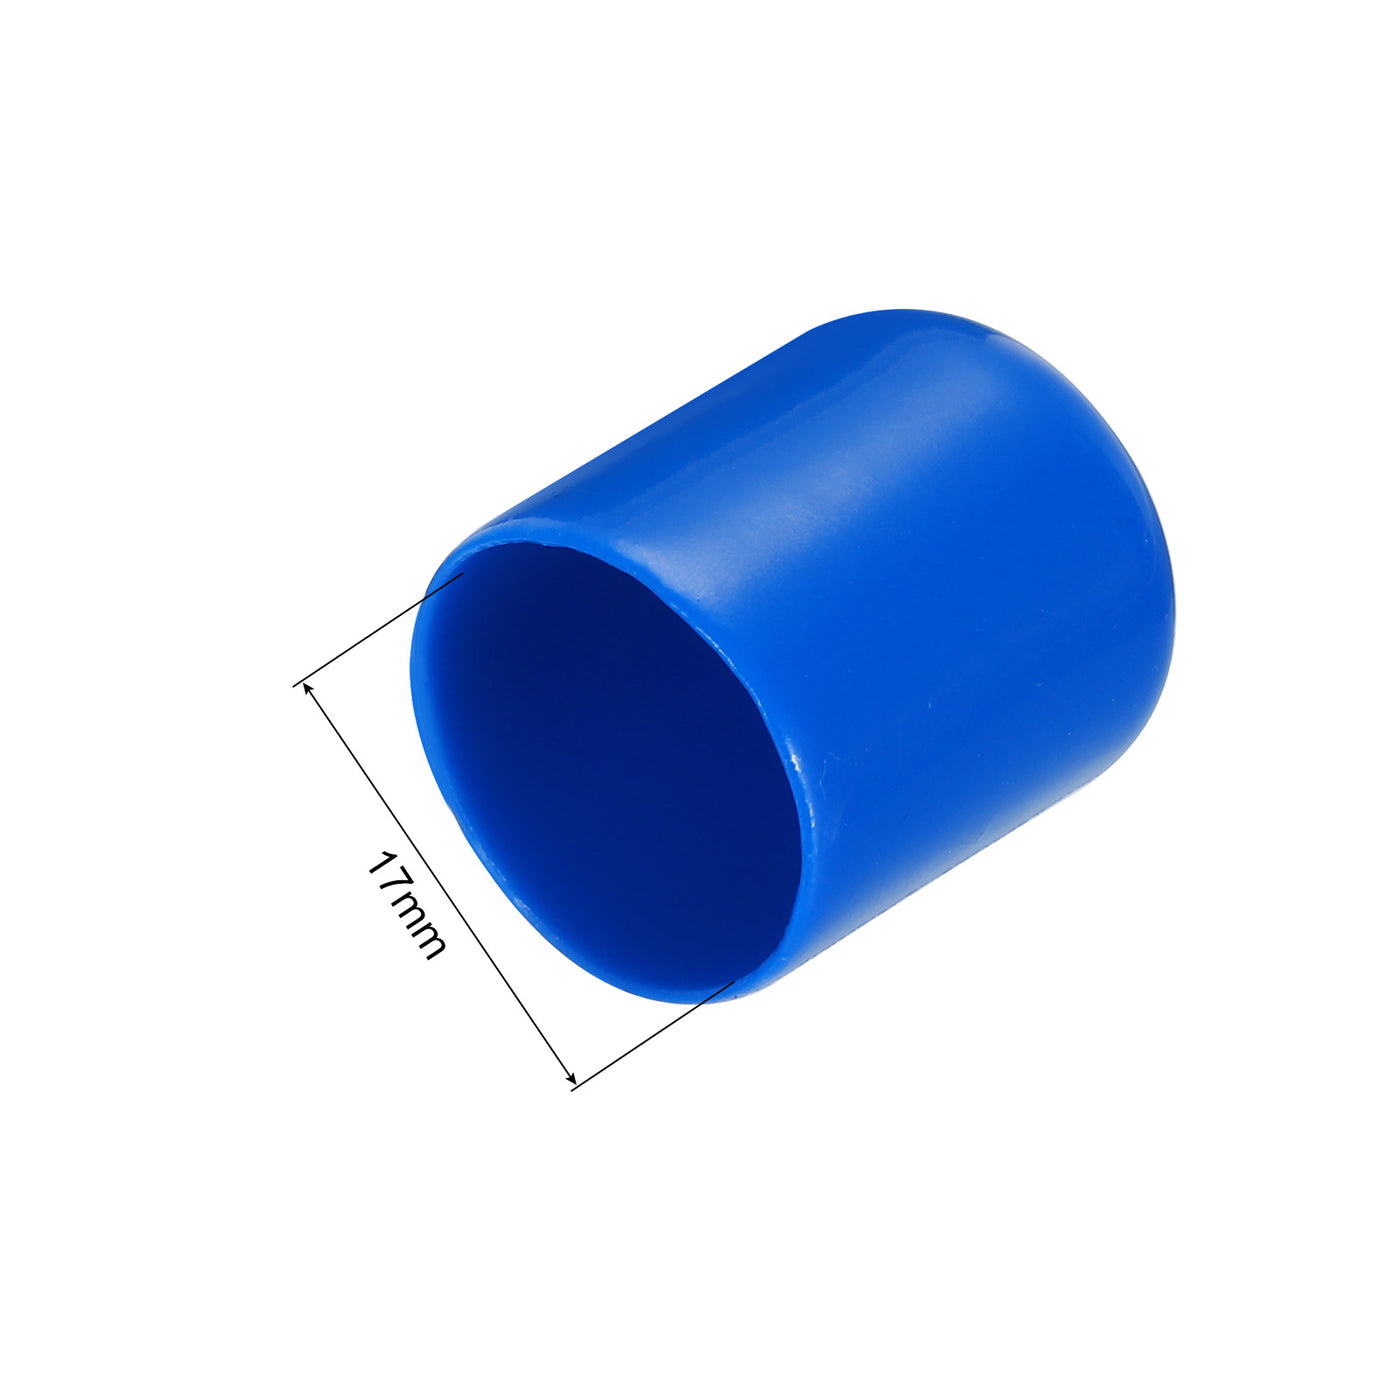 uxcell Uxcell 50pcs Rubber End Caps 17mm ID Vinyl PVC Round Tube Bolt Cap Cover Screw Thread Protectors Blue